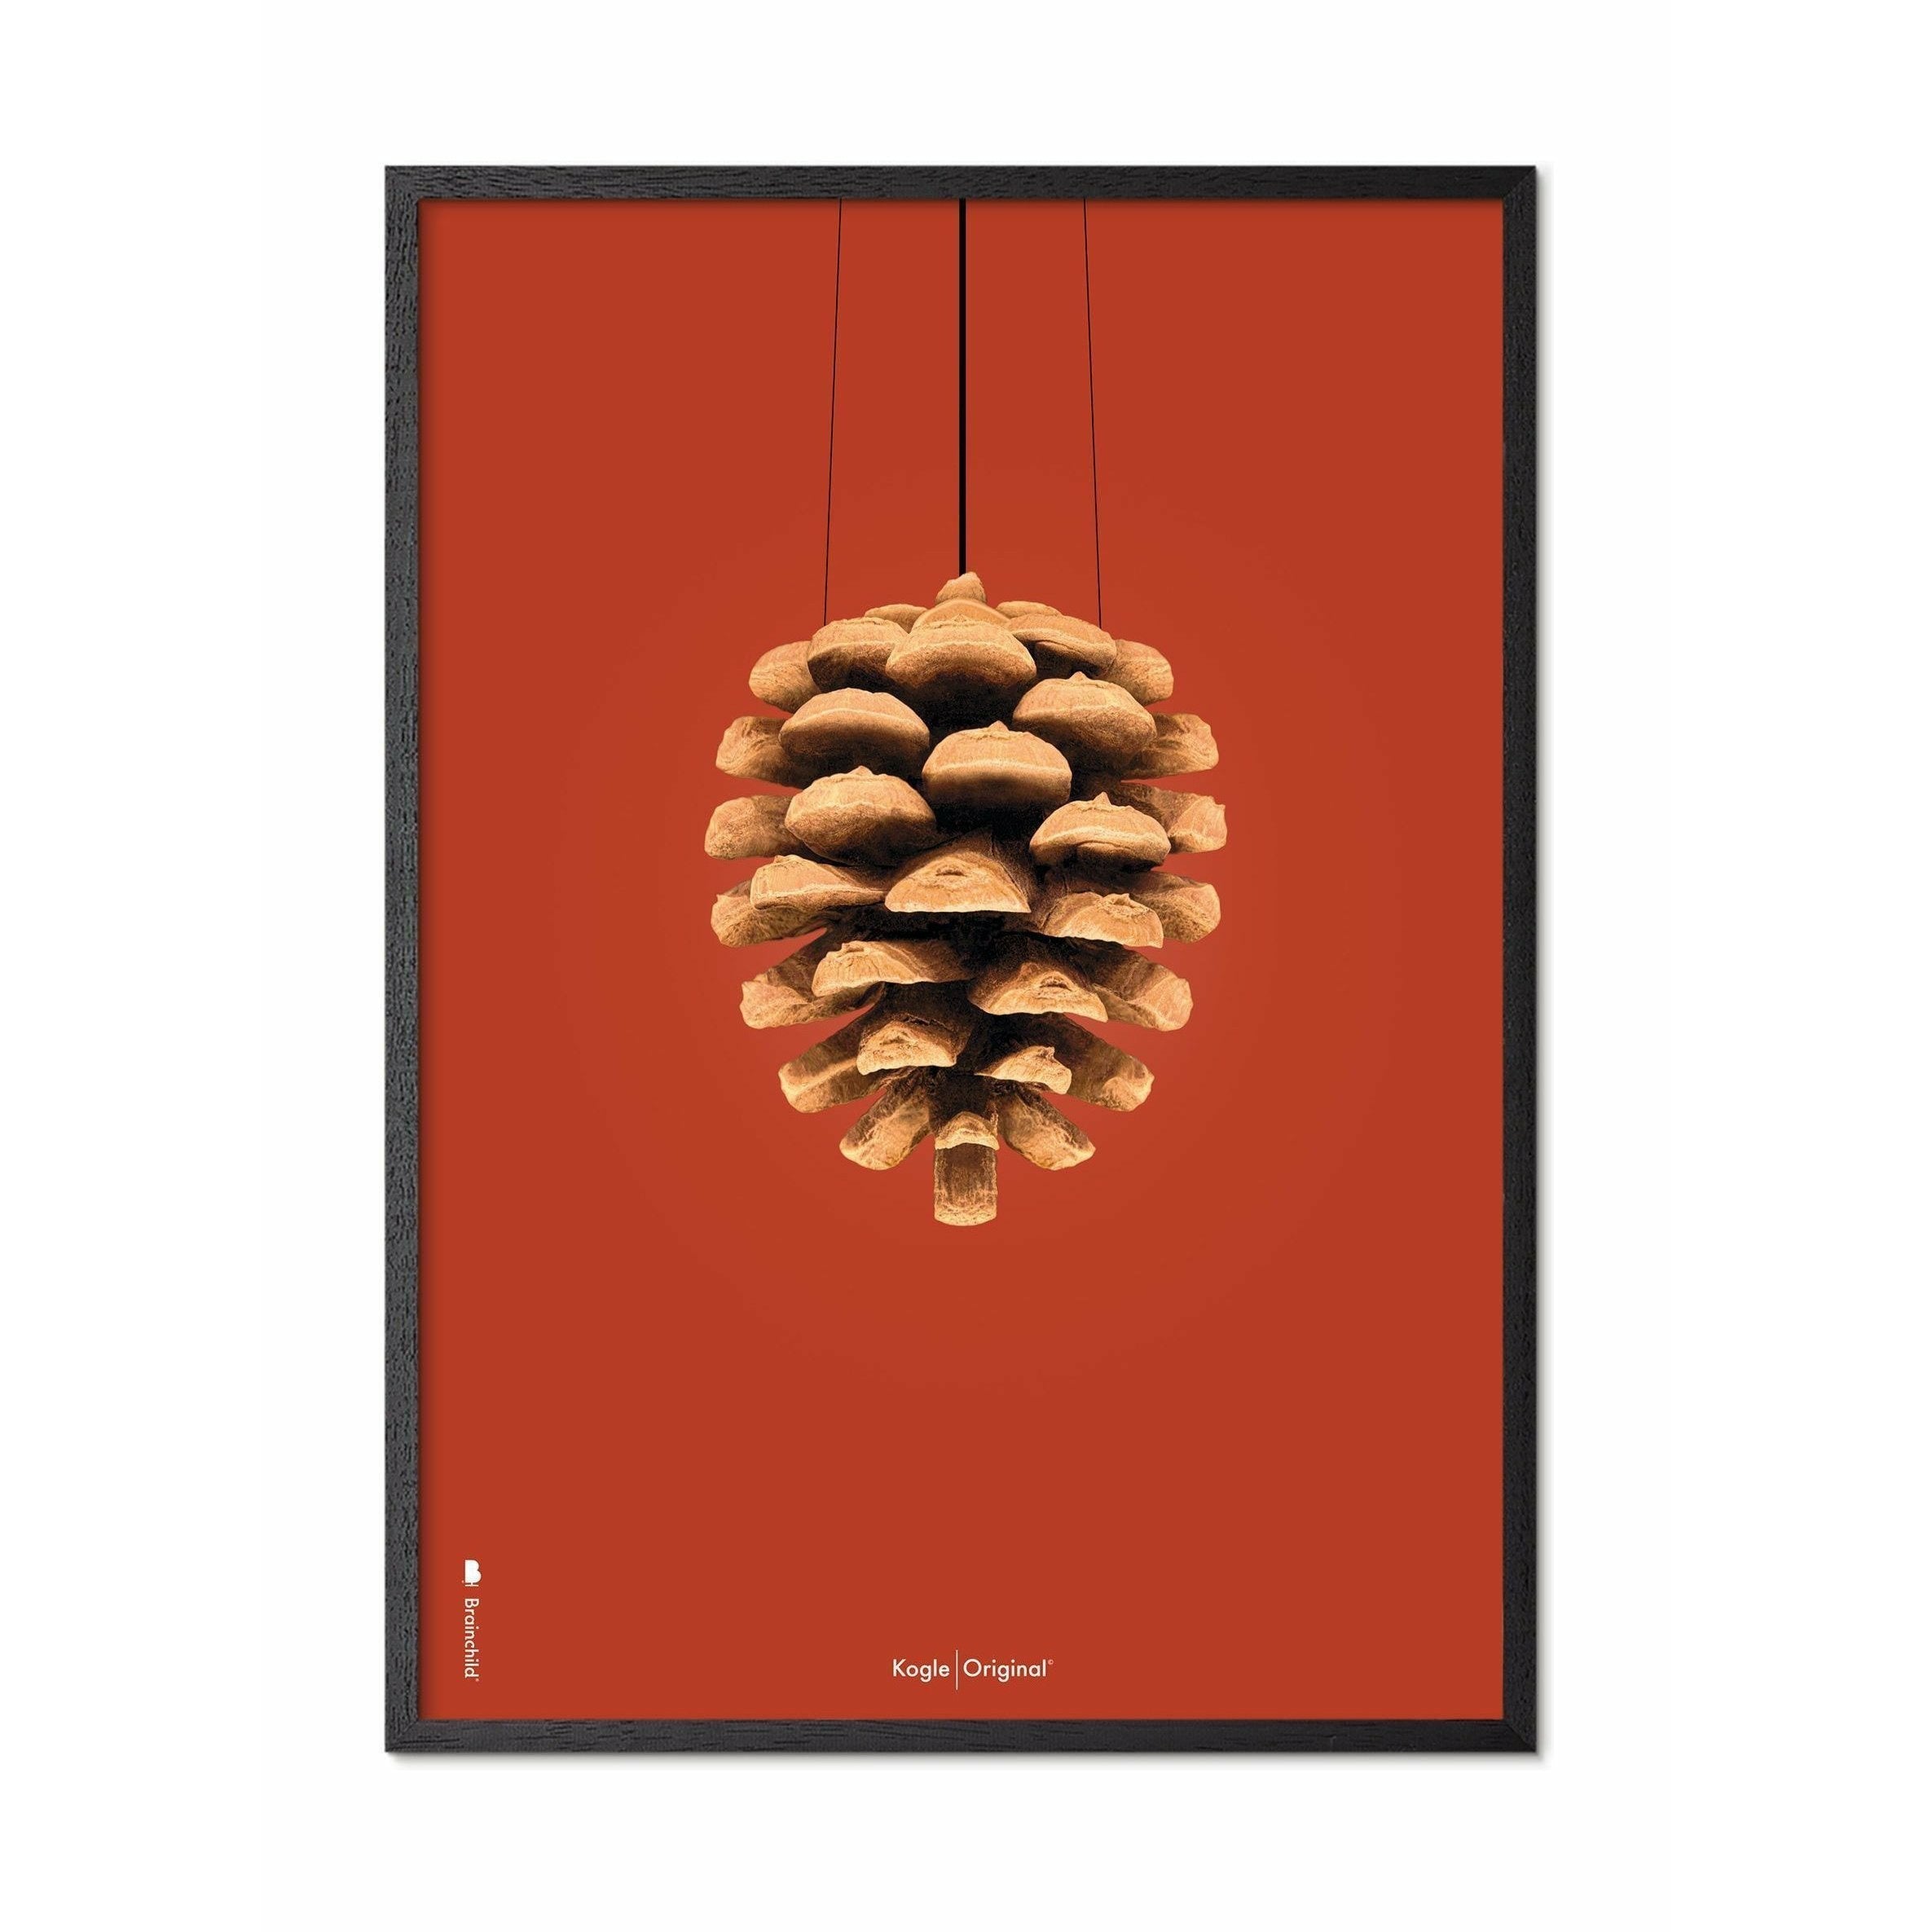 Brainchild Kogle Klassisk Plakat, Ramme I Sortmalet Træ 50X70 Cm, Rød Baggrund